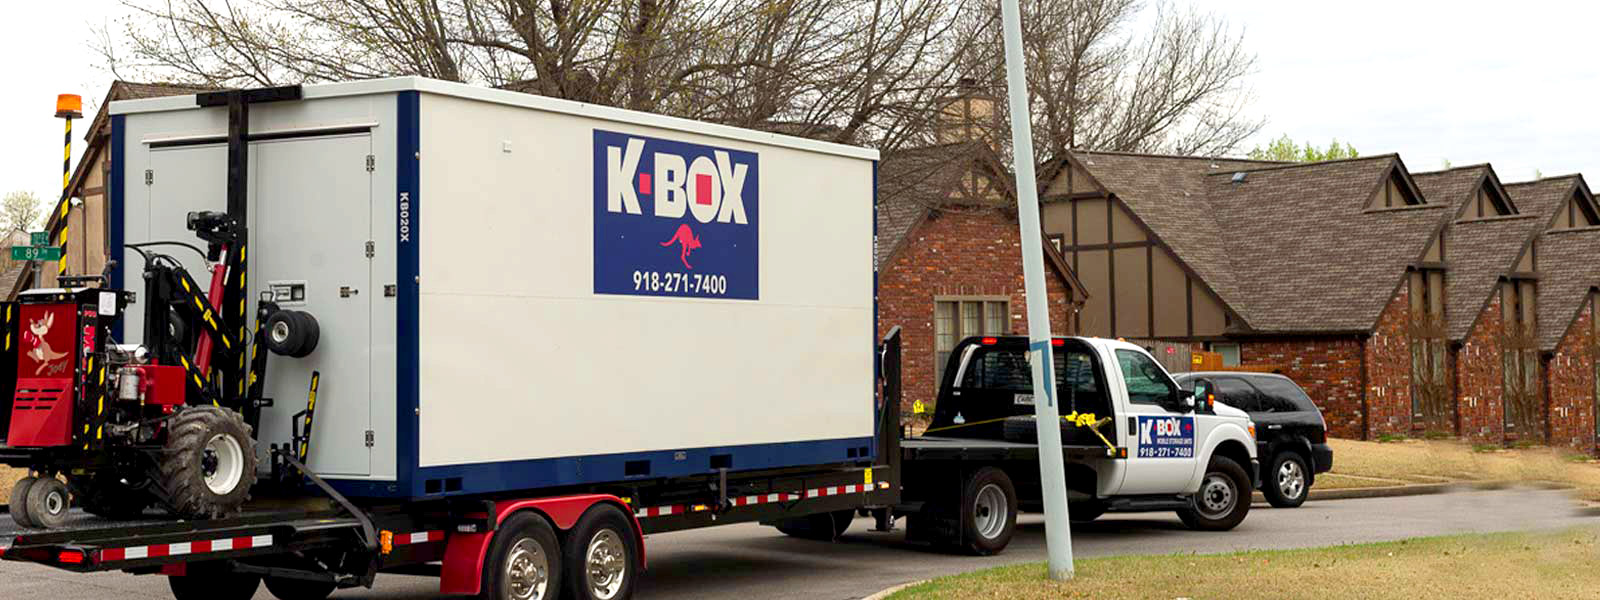 kbox Mobile storage truck delivering storage container in Tulsa